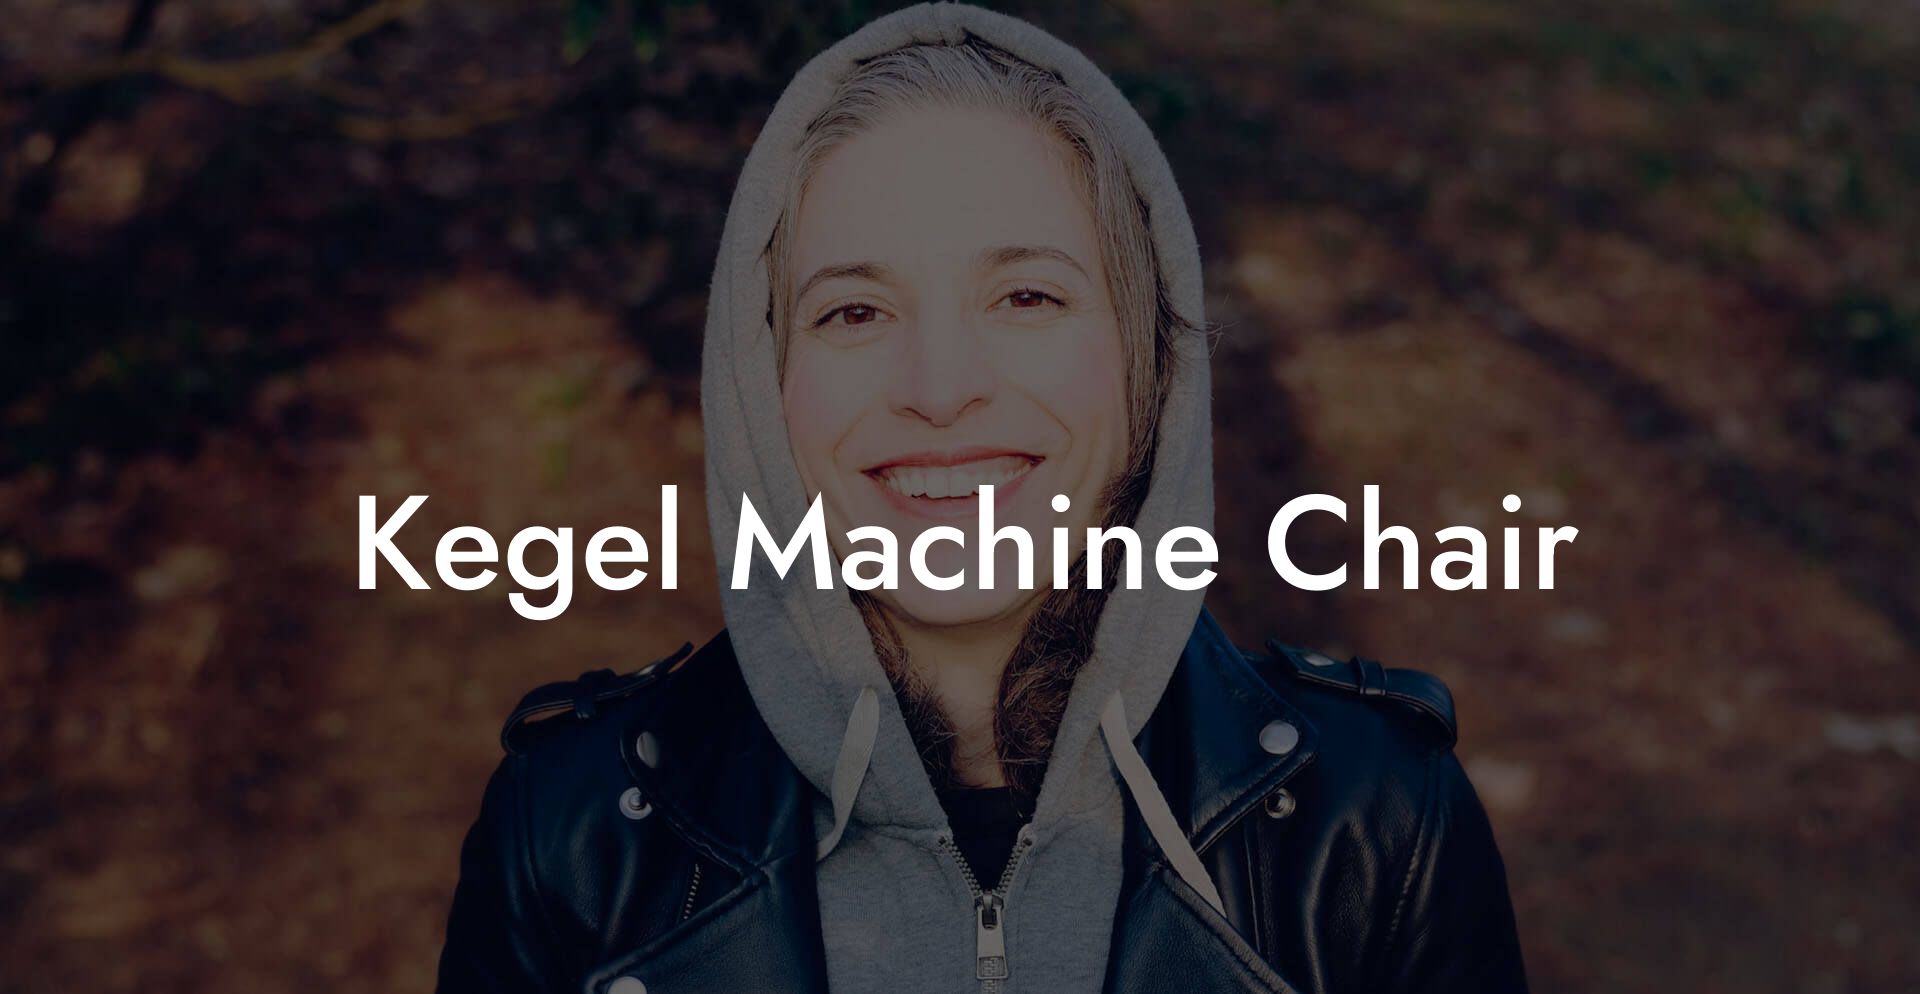 Kegel Machine Chair